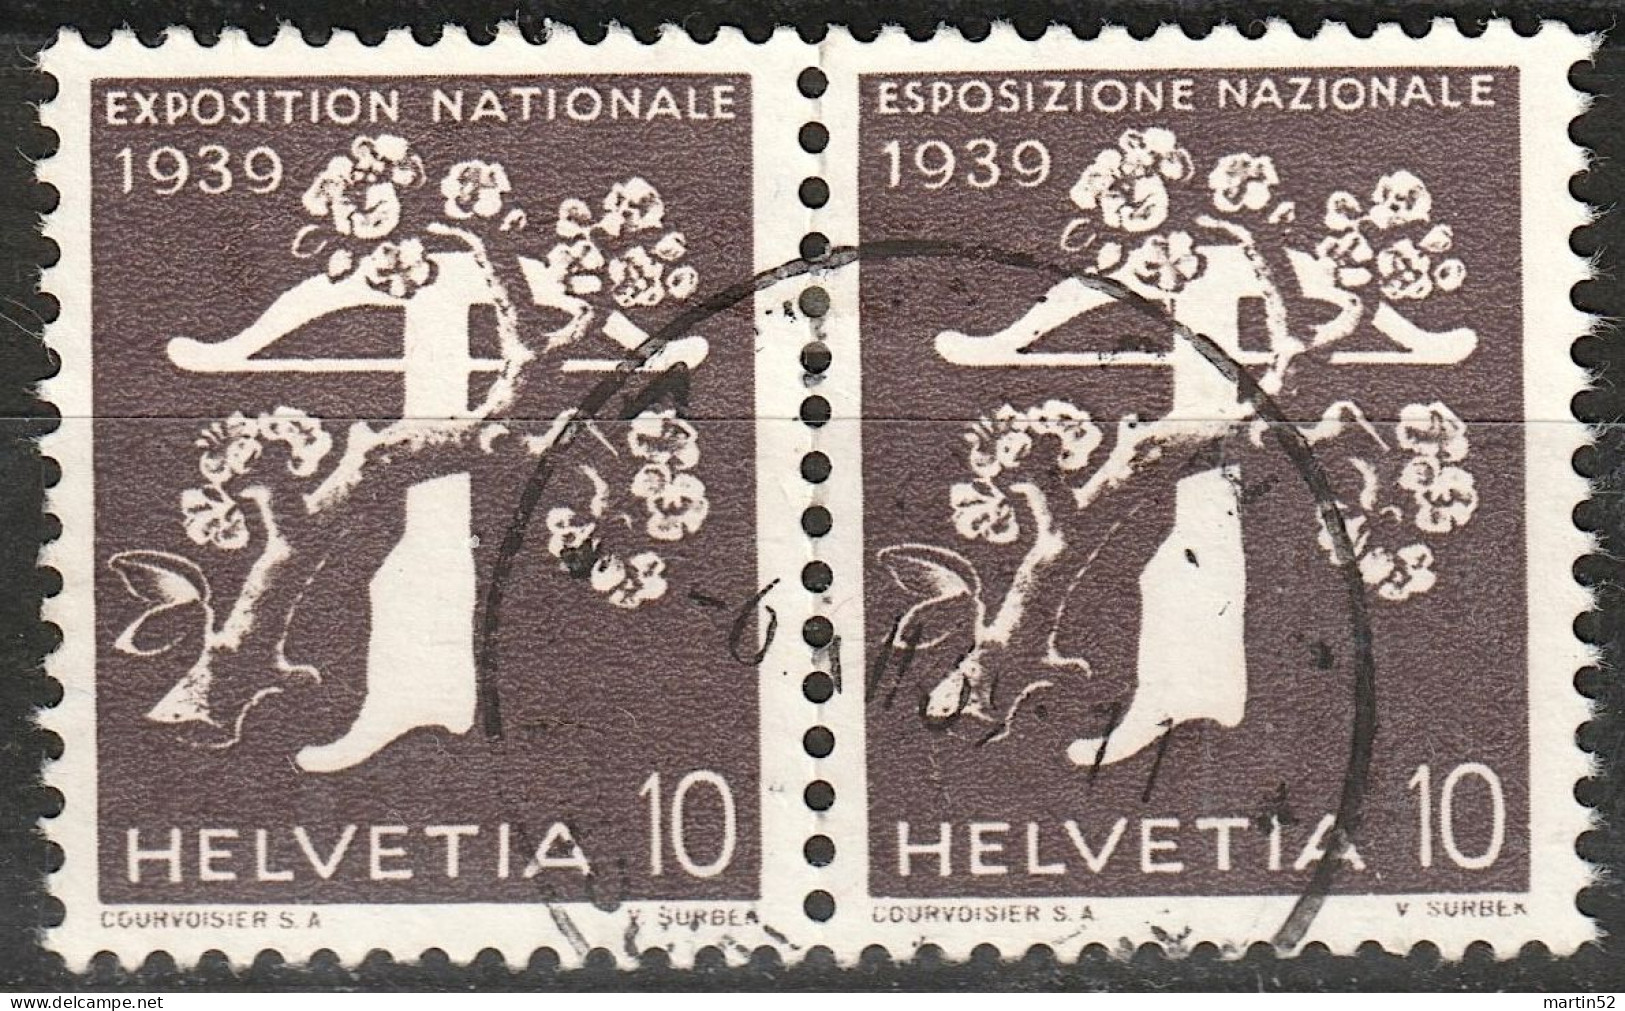 Schweiz Suisse 1939: Rollenpaar-ZDR / Se-tenant Rouleaux / Coil-pair Zu Z26e Mi W15 ⊙ ZÜRICH 6.XII.39 (Zu CHF 21.50) - Se-Tenant